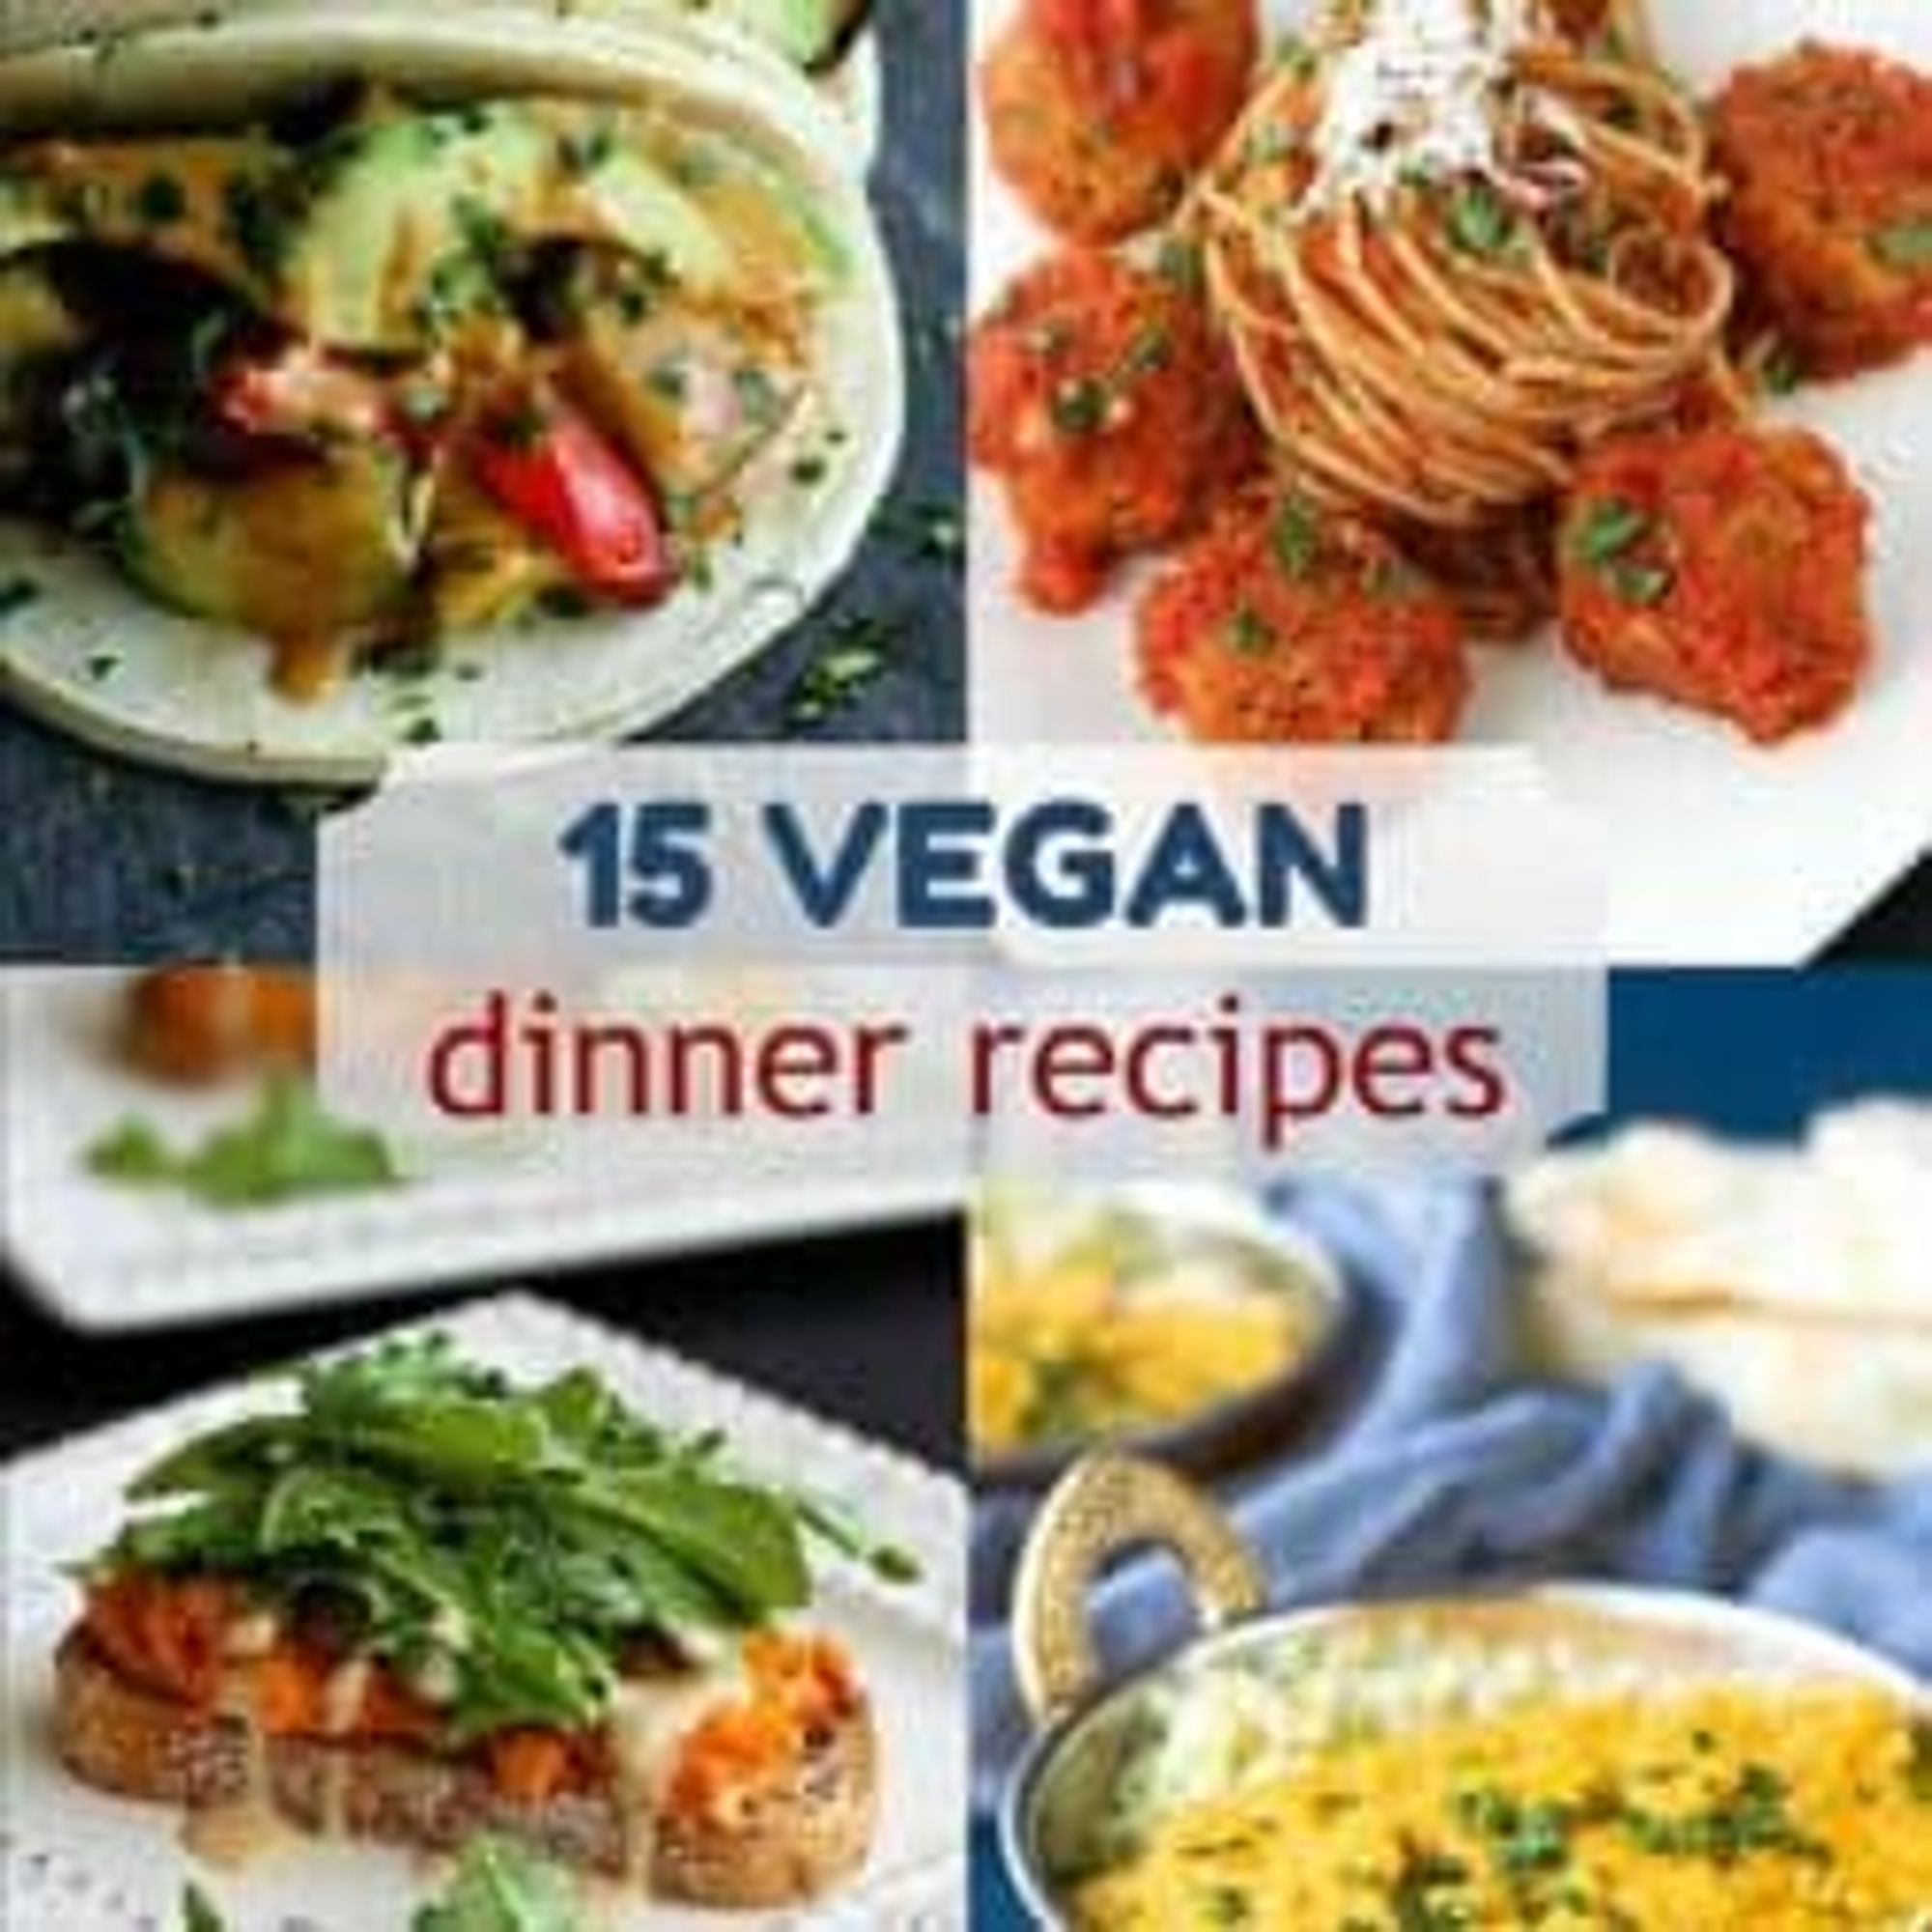 Cookin Canuck - Healthy Recipes Food Blog - My Recipe Magic